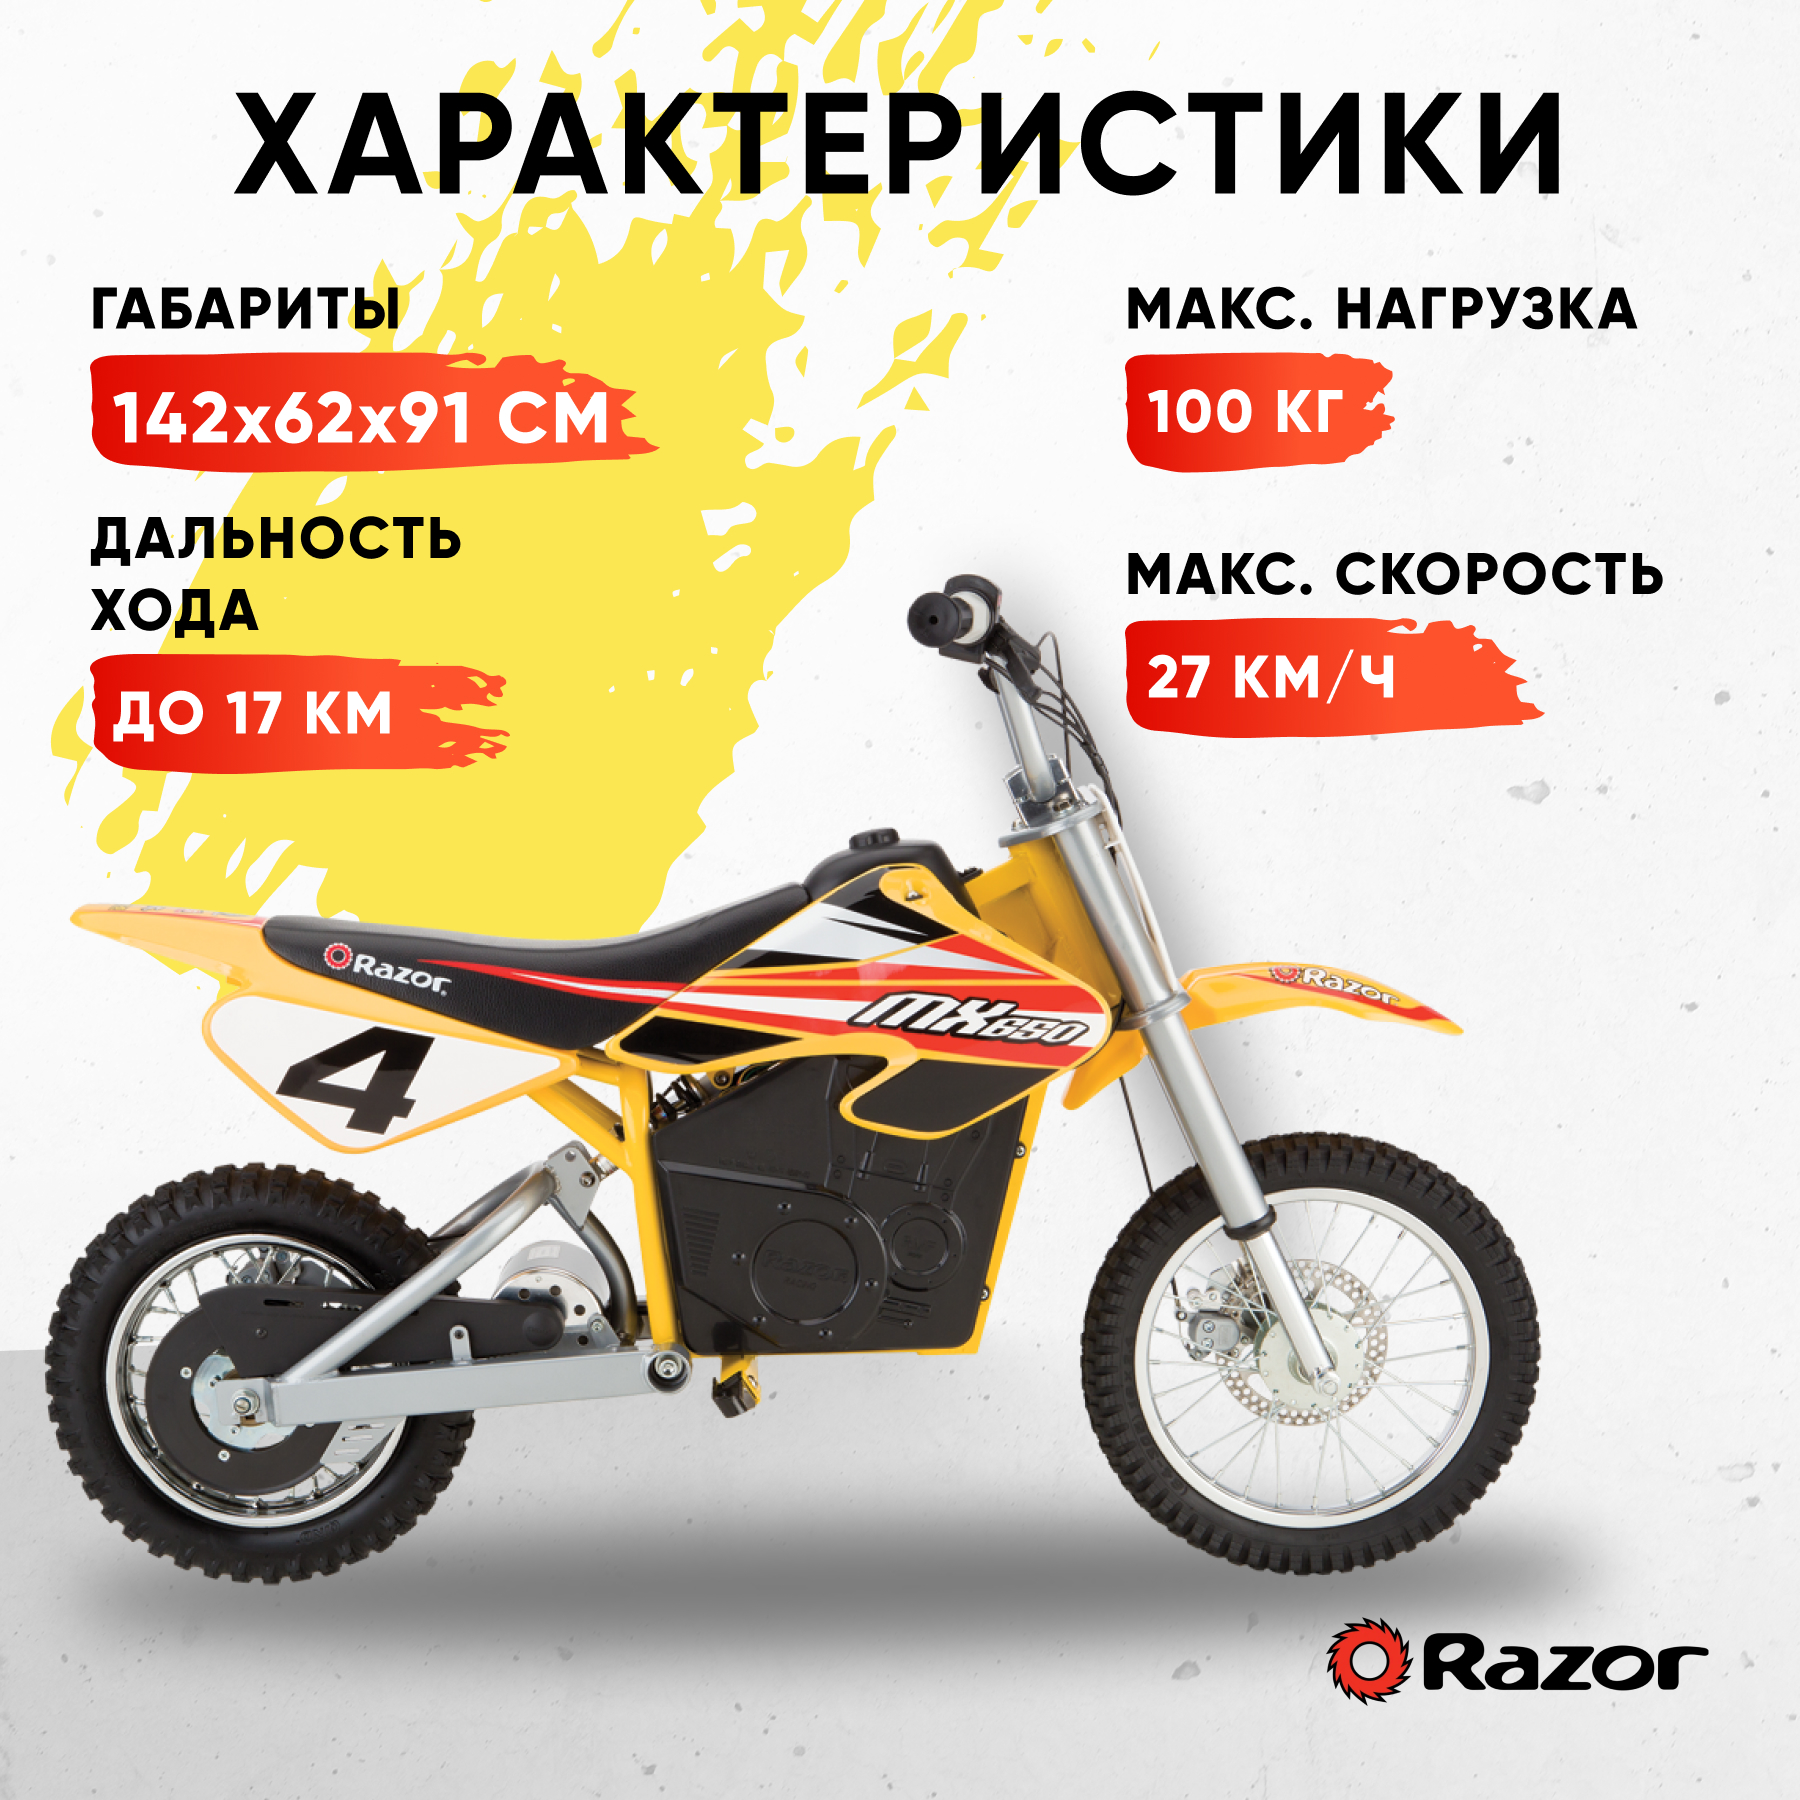 Электромотоцикл для детей RAZOR MX650 жёлтый с амортизаторами для бездорожья - фото 3